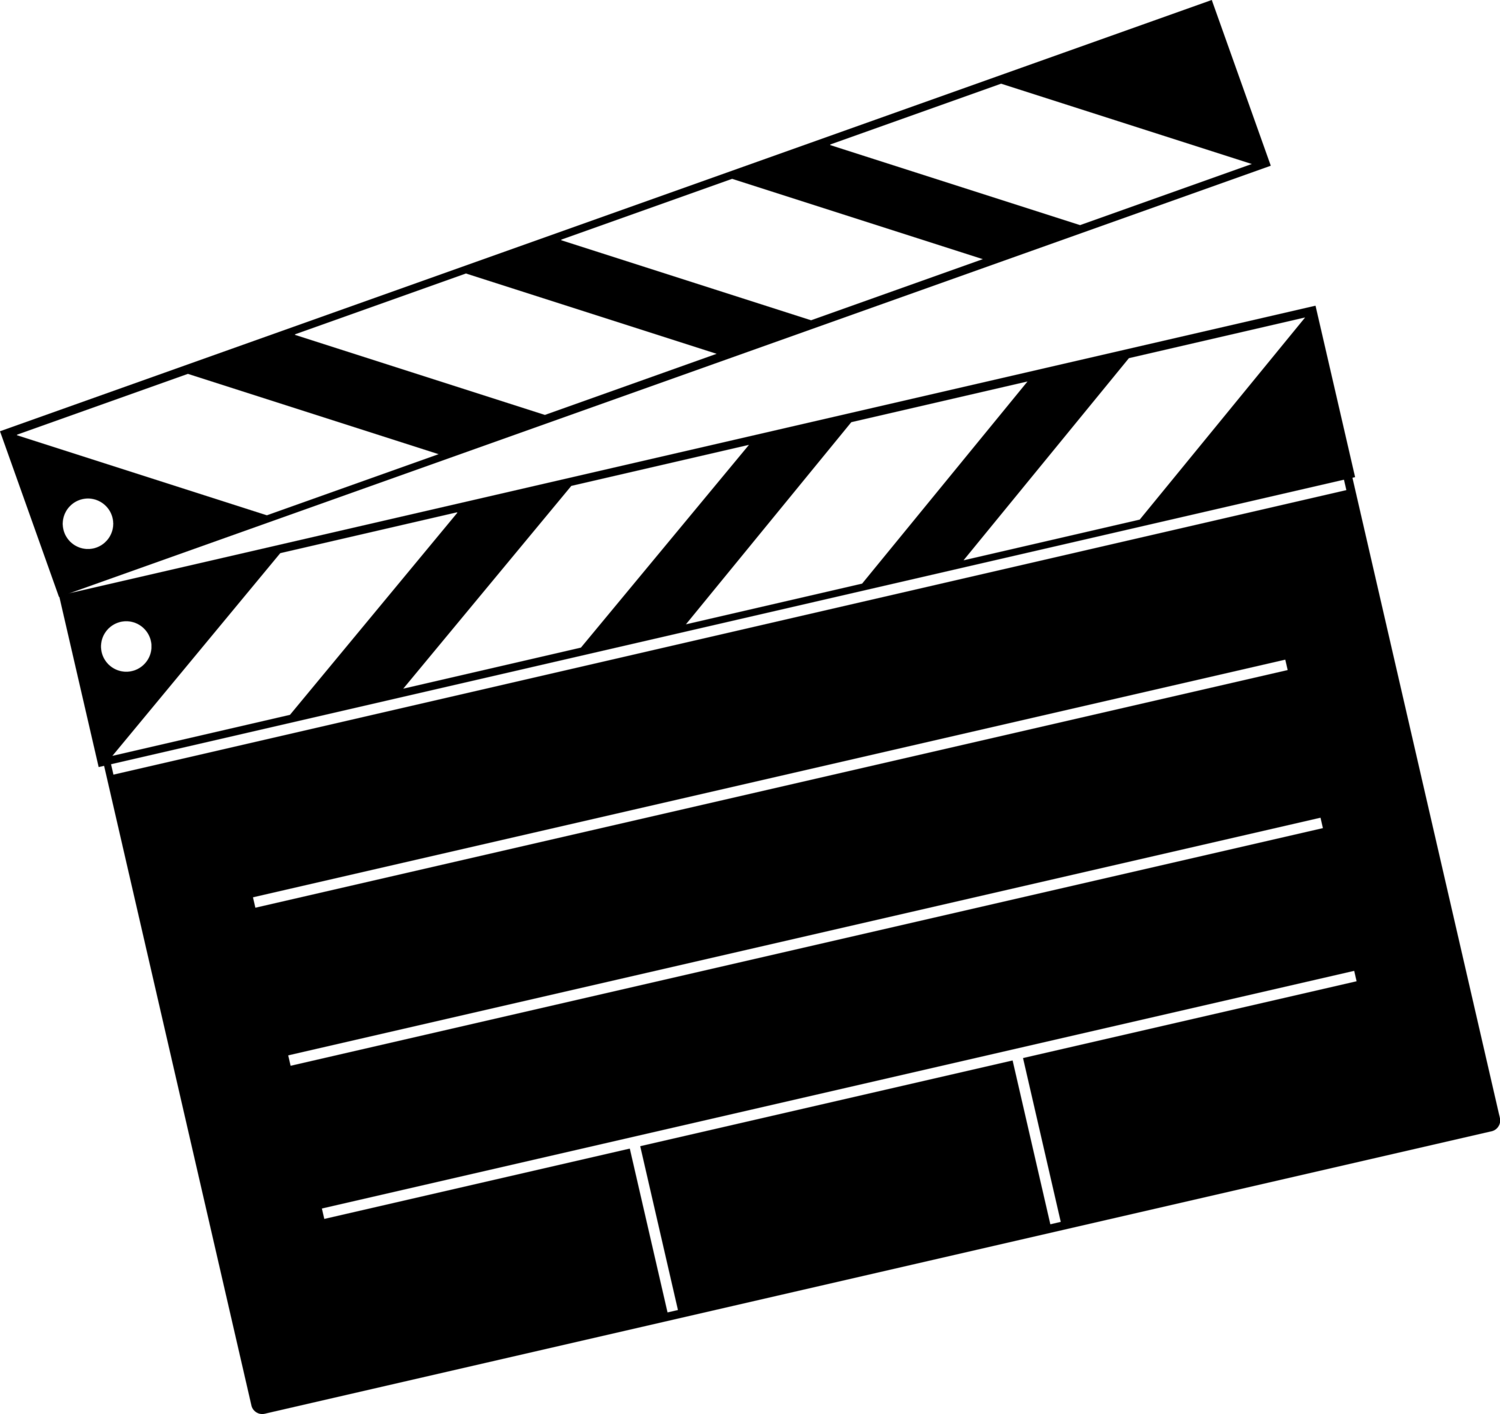 video clipart movie studio